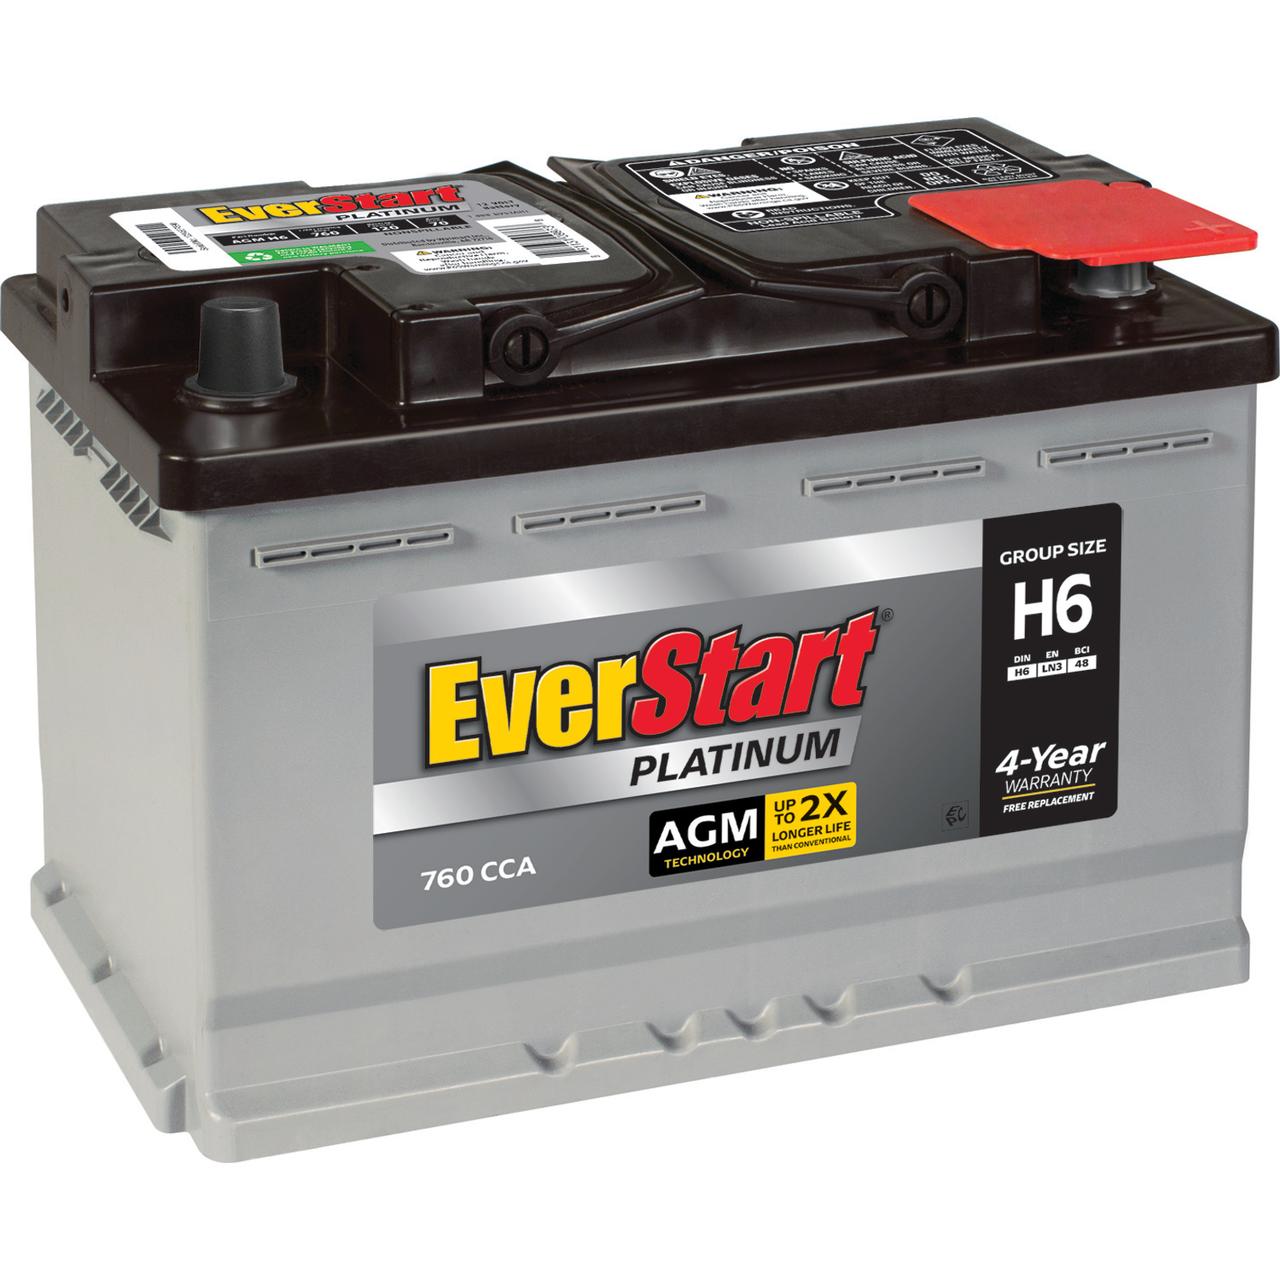 EverStart Platinum AGM Automotive Battery, Group H6 / LN3 / 48 12 Volt, 760 CCA - image 1 of 7